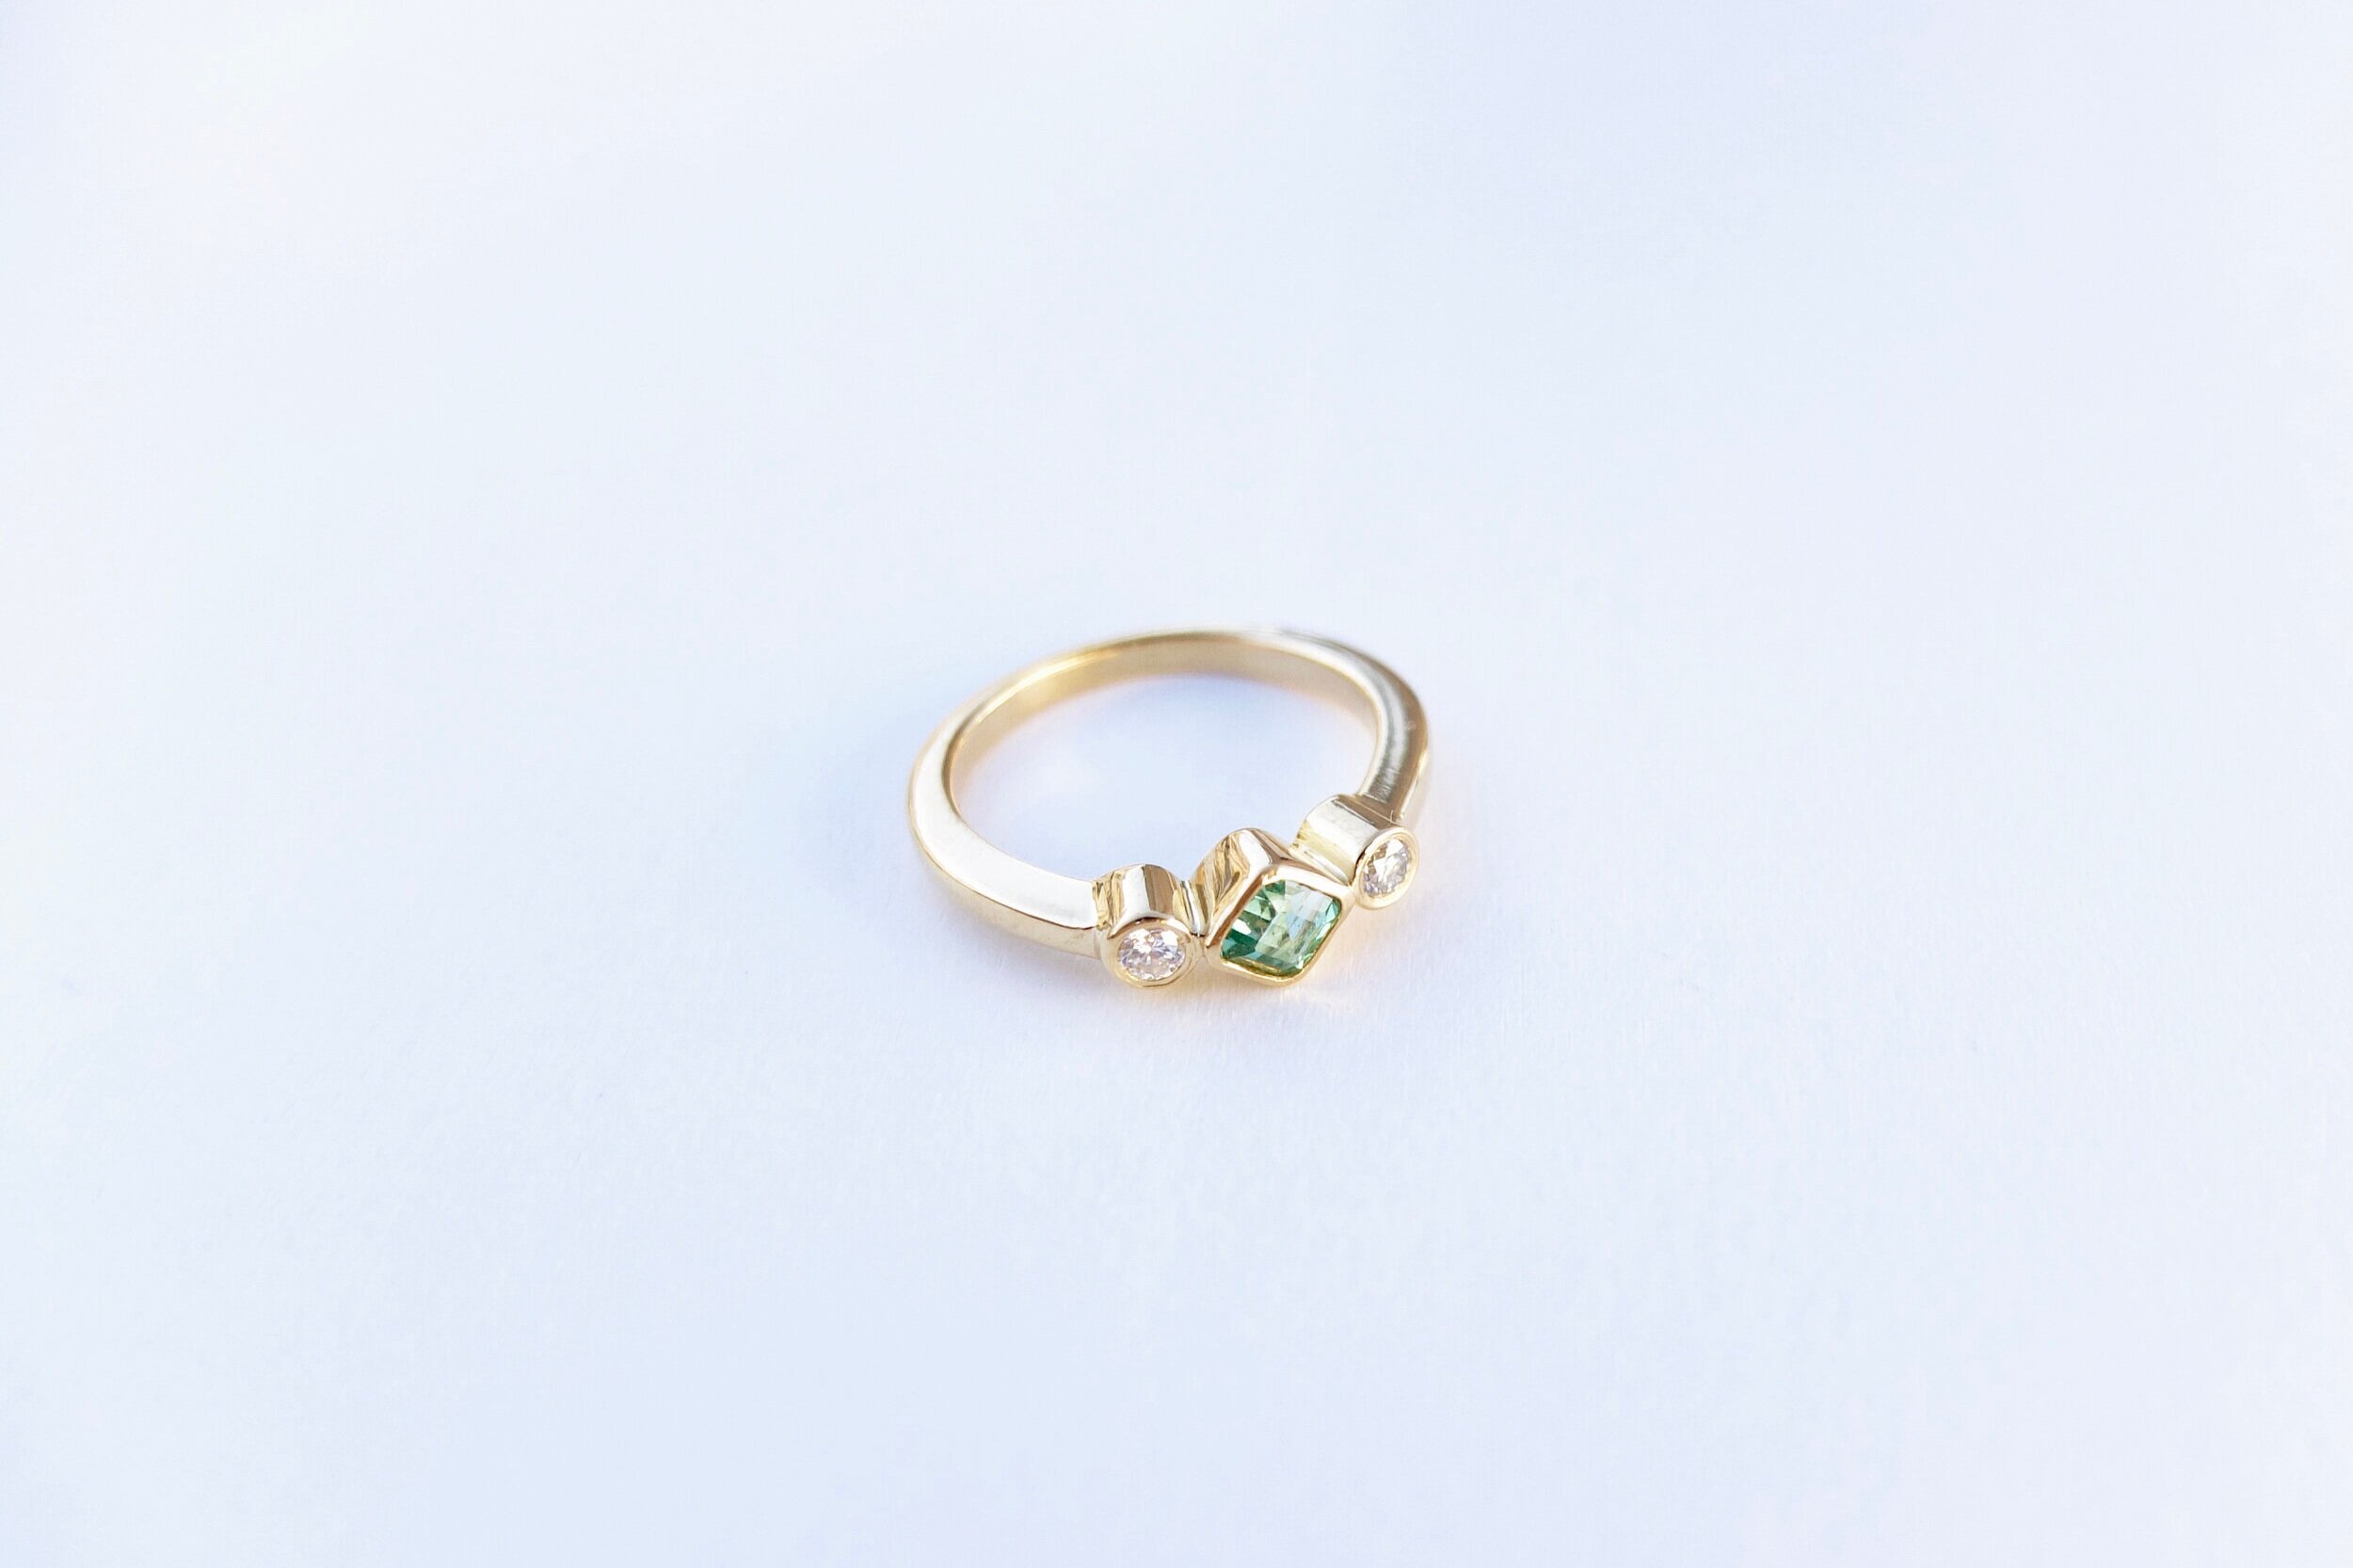 8.Rita_Carrega_Joalharia_Jewelry_Anel_Ouro_Brilhantes_Esmeralda_Gold_Ring_Diamonds_Emerald_.jpg